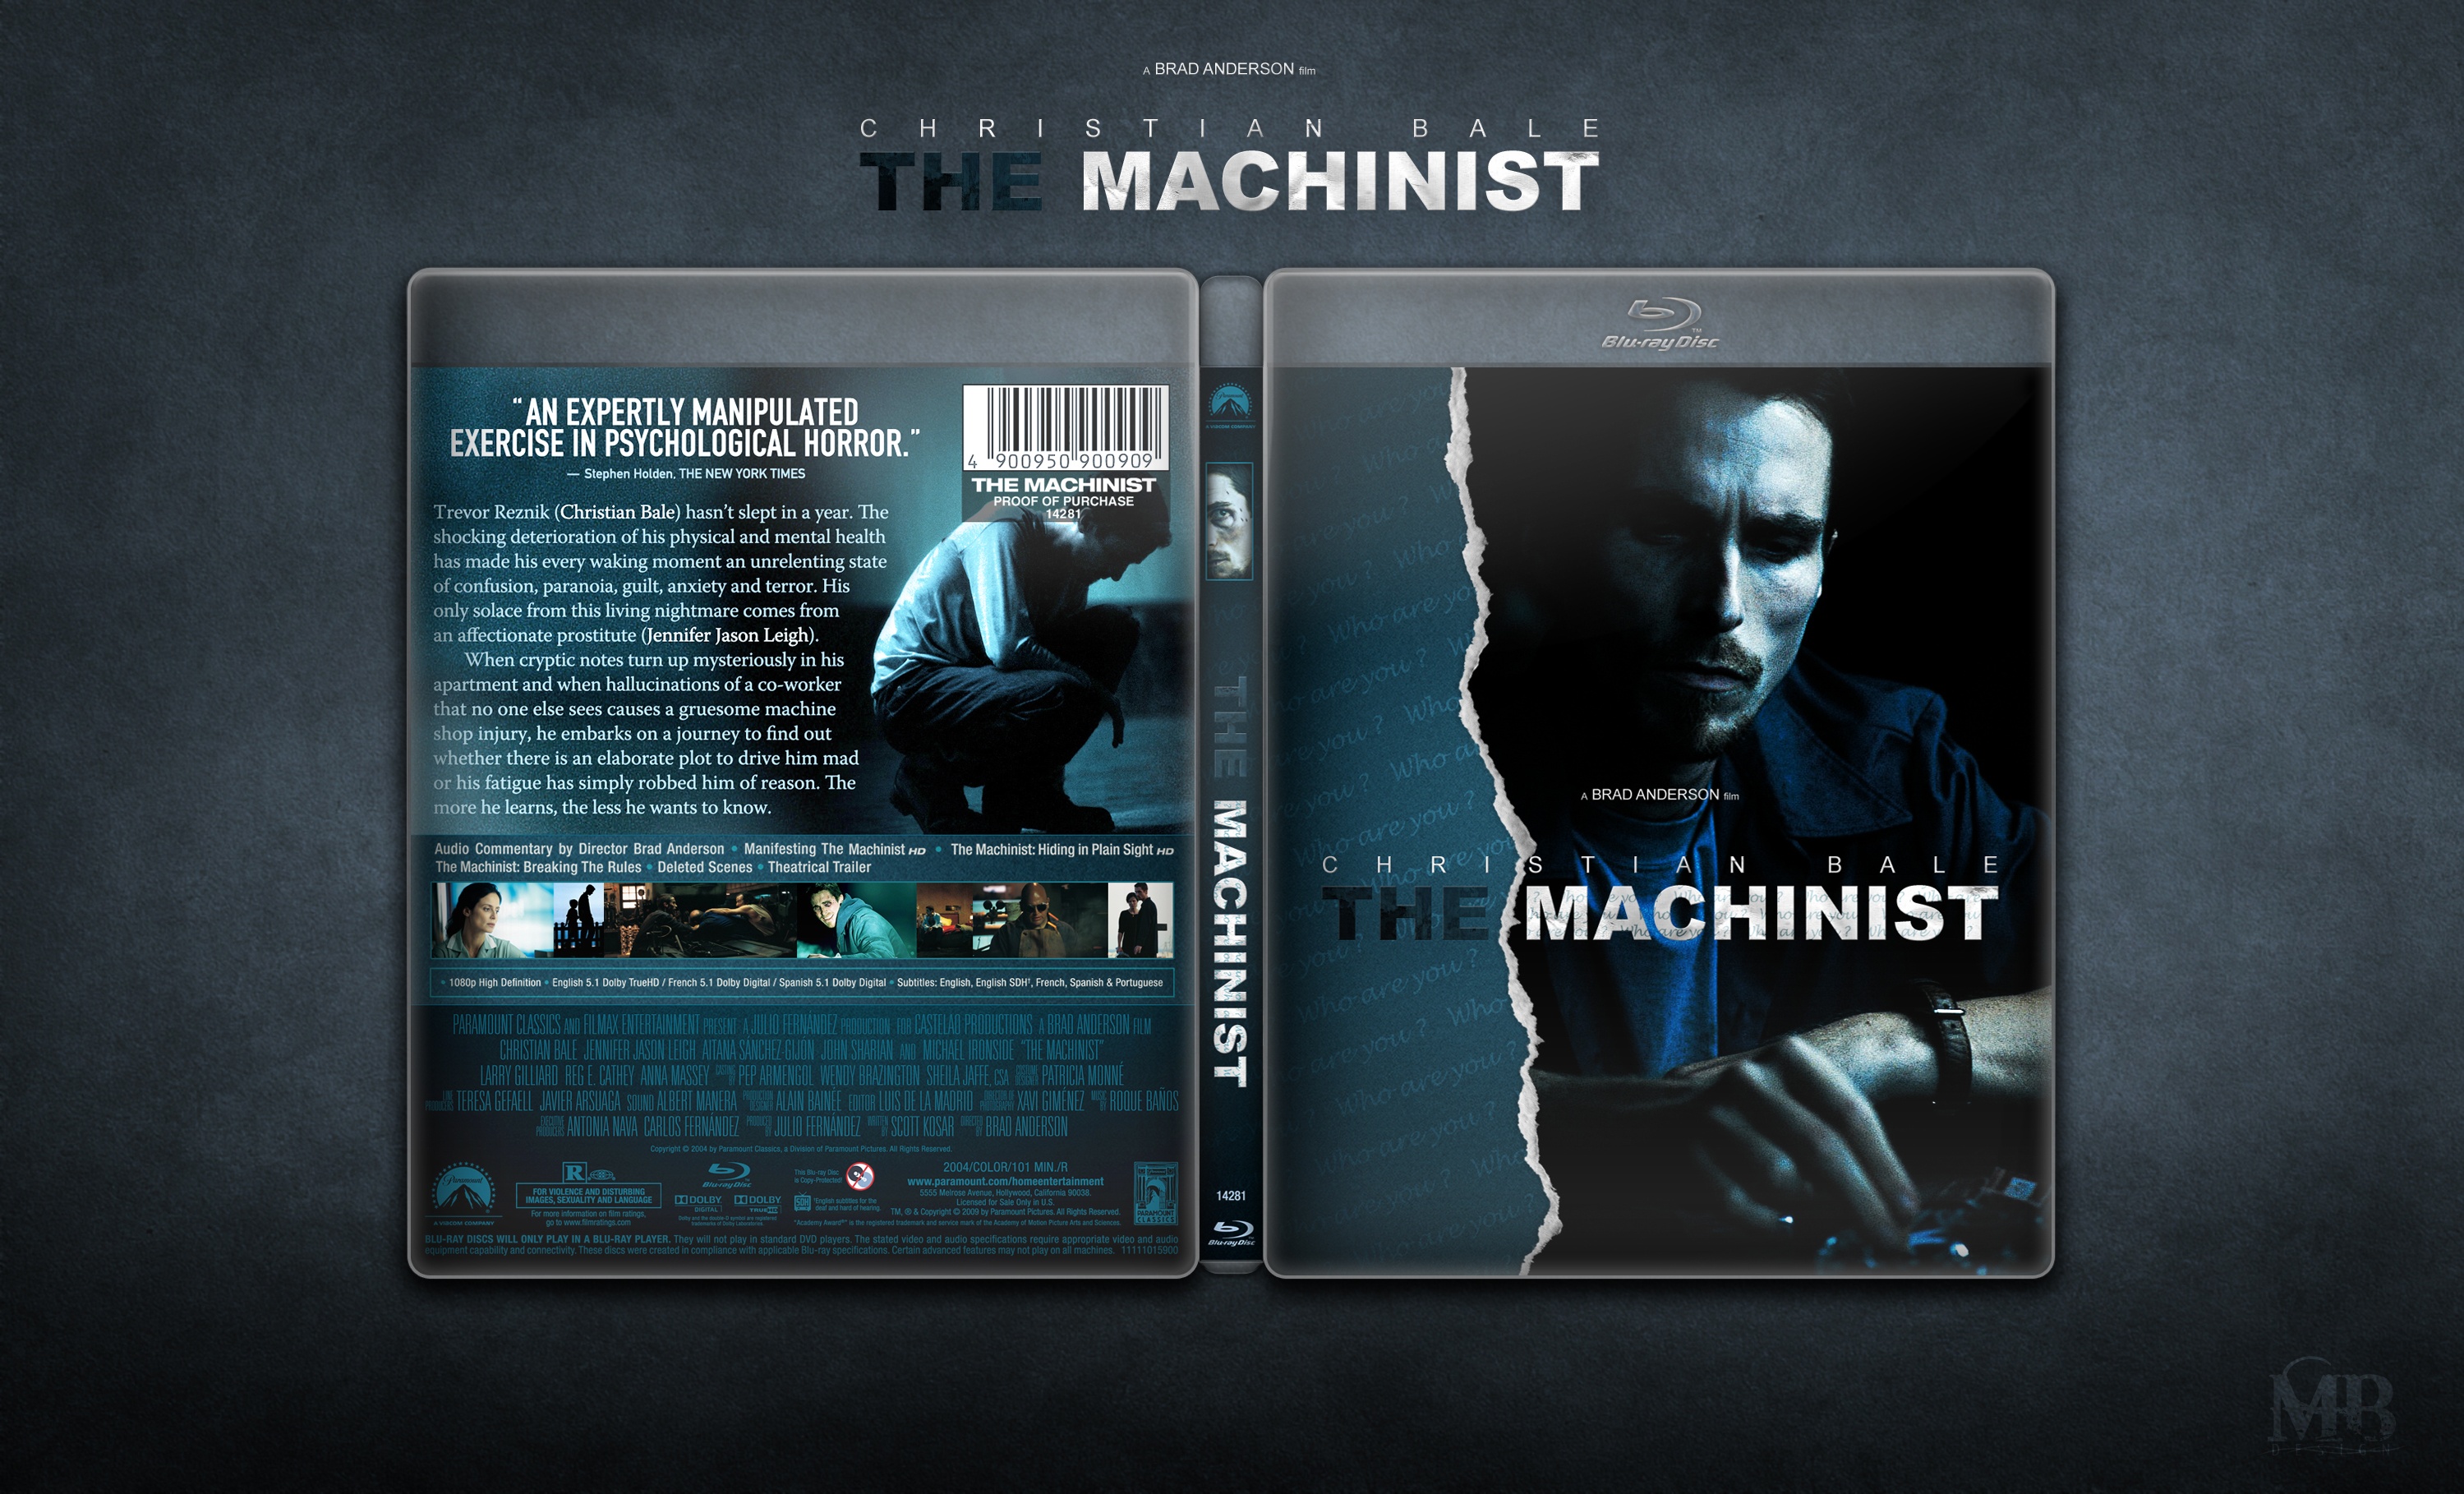 The Machinist box cover